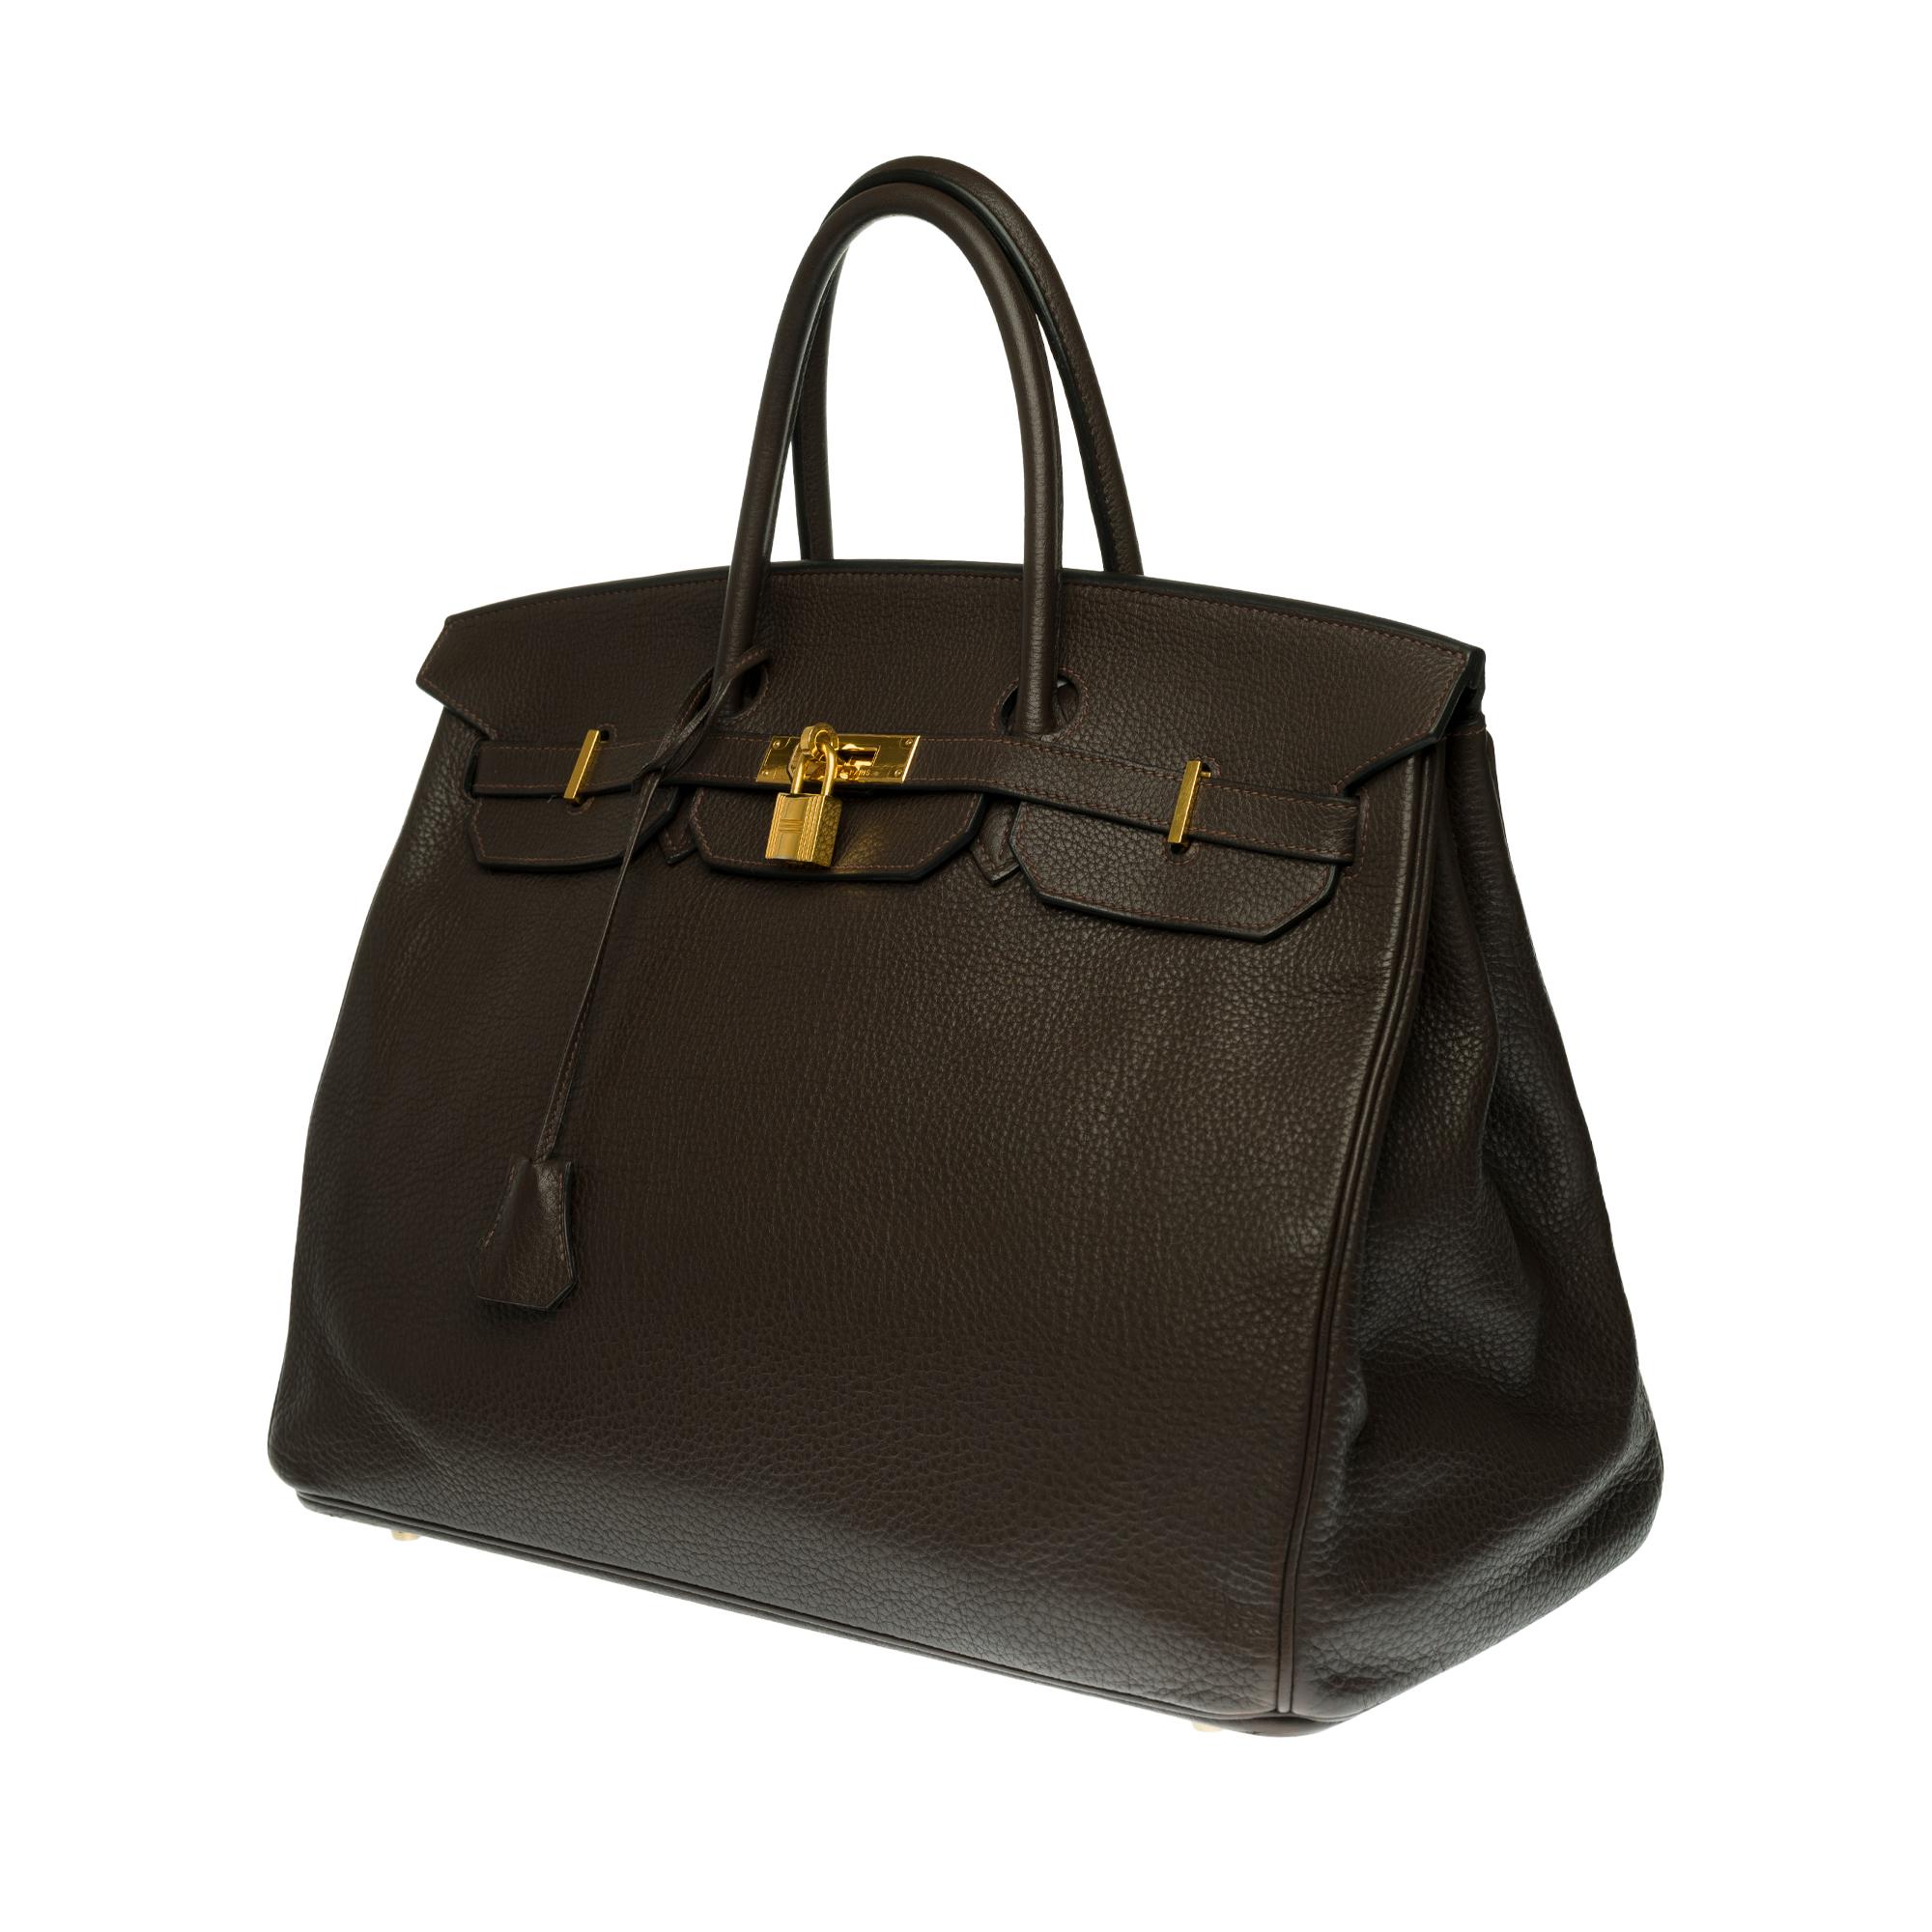 Black Stunning Hermes Birkin 40cm handbag in Brown Togo leather with gold hardware